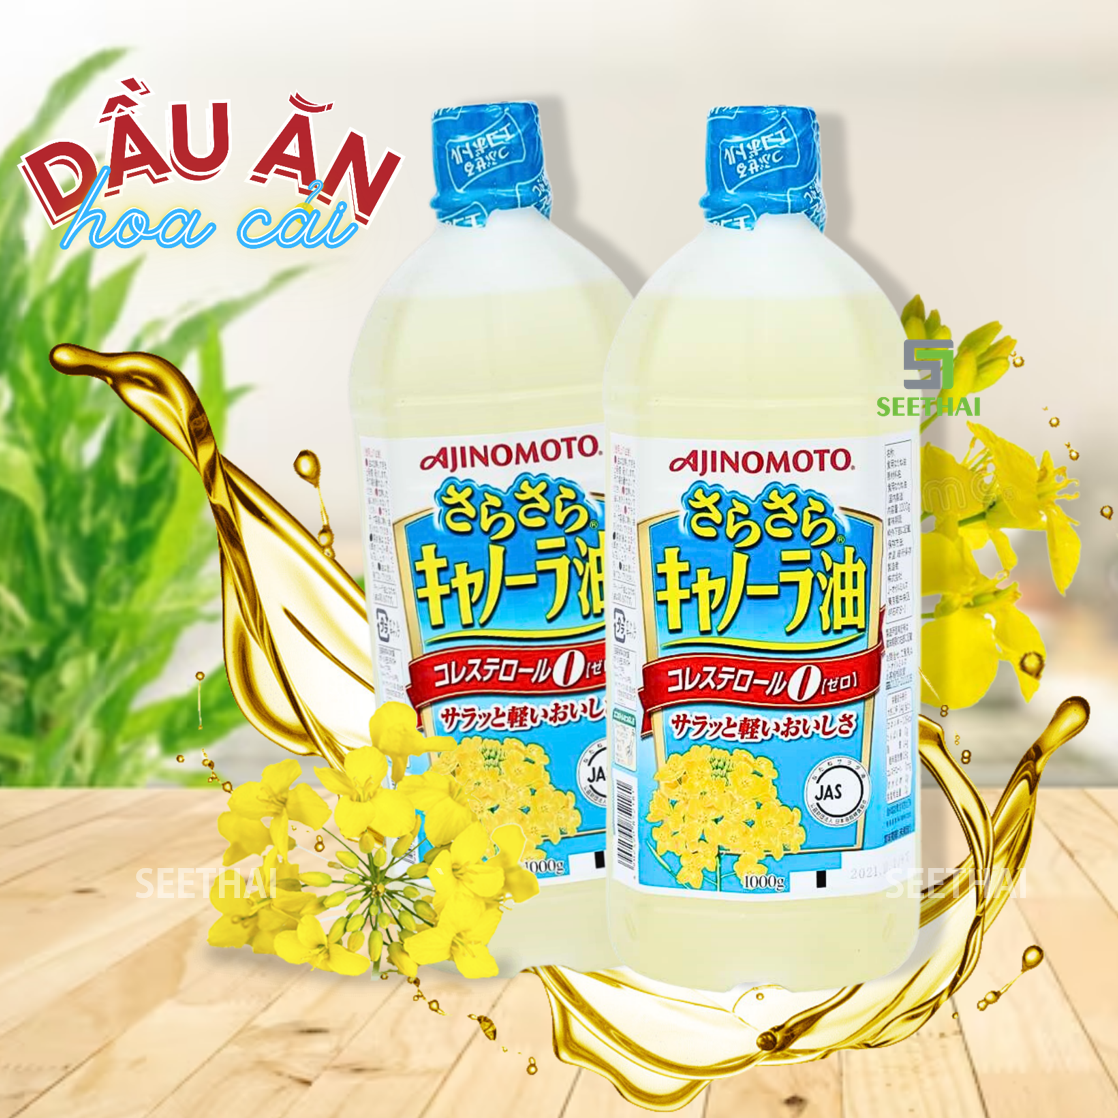 Dầu ăn hoa cải AJINOMOTO Nhật Bản - chai 1000ml - Canola cooking oil